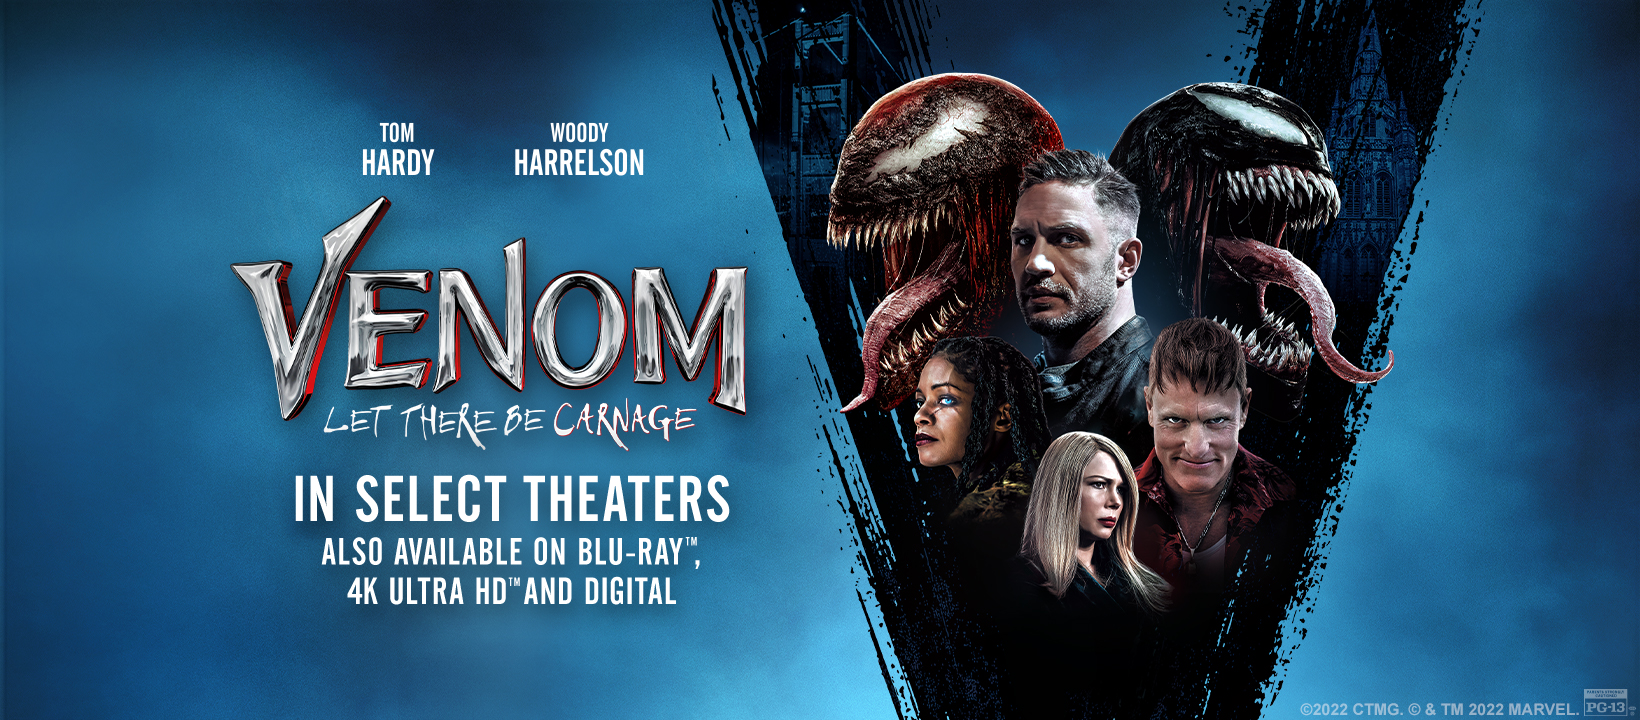 Venom 2 returns to select theaters